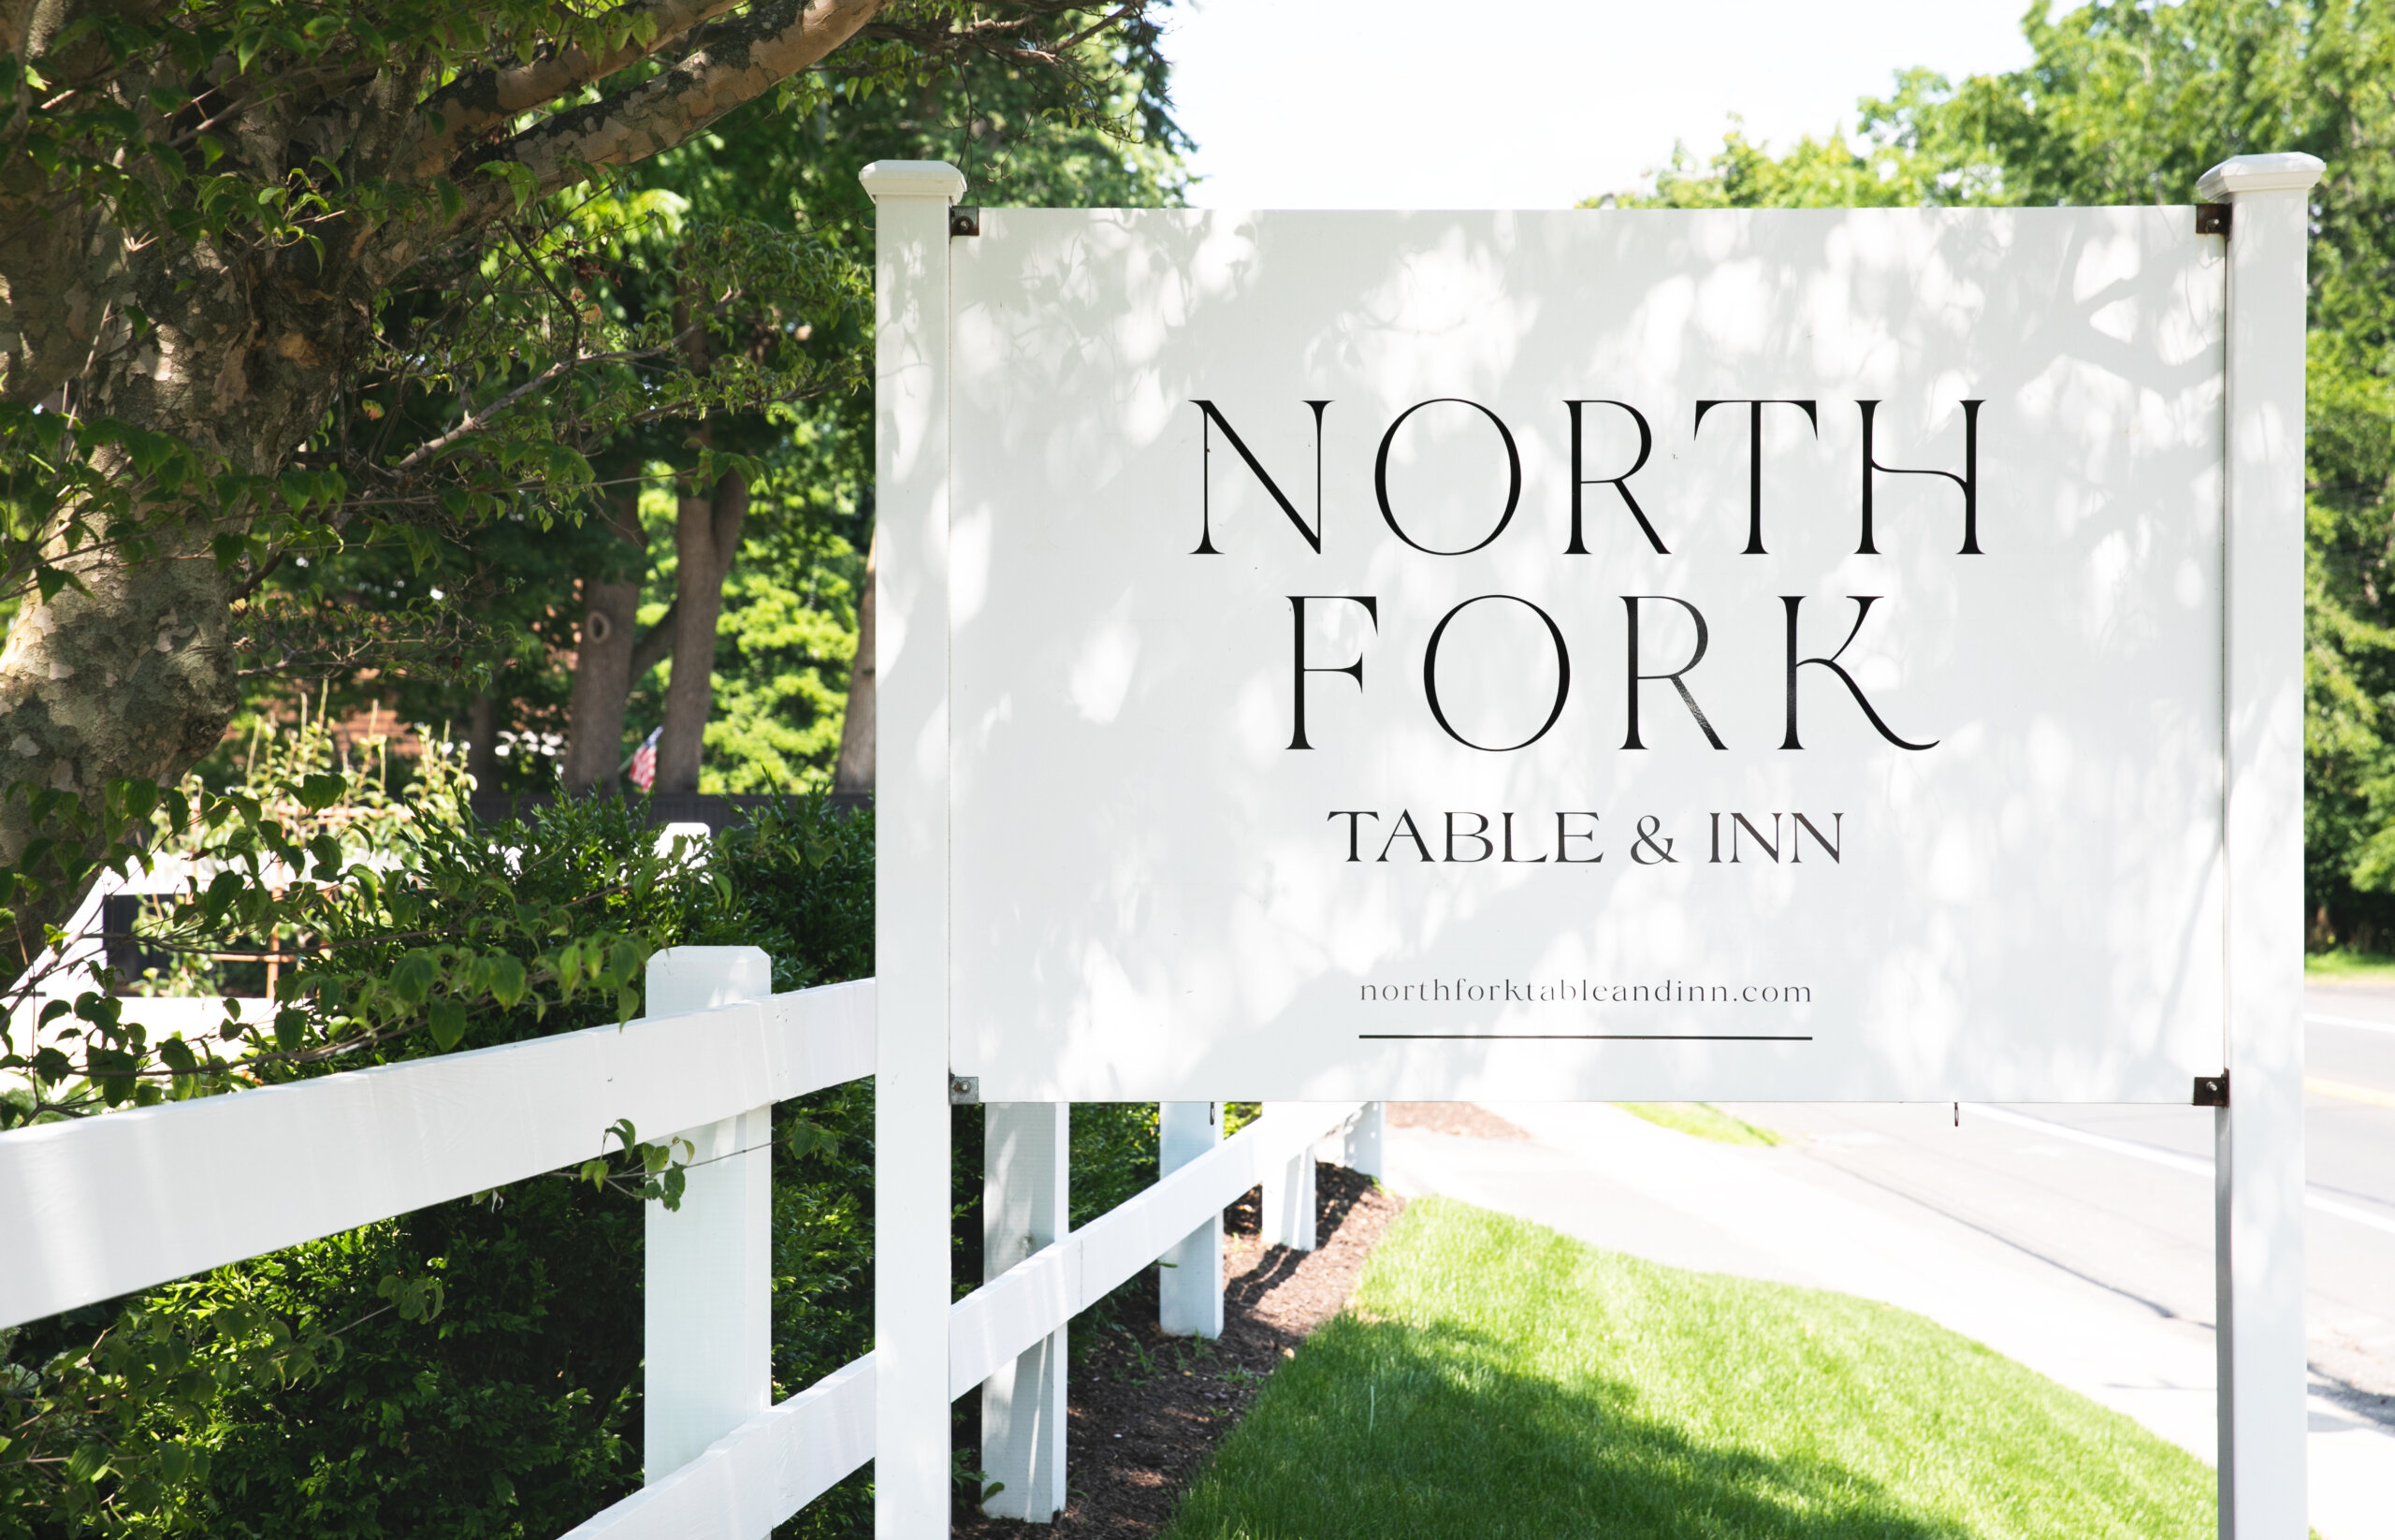 North Fork Table & Inn sign